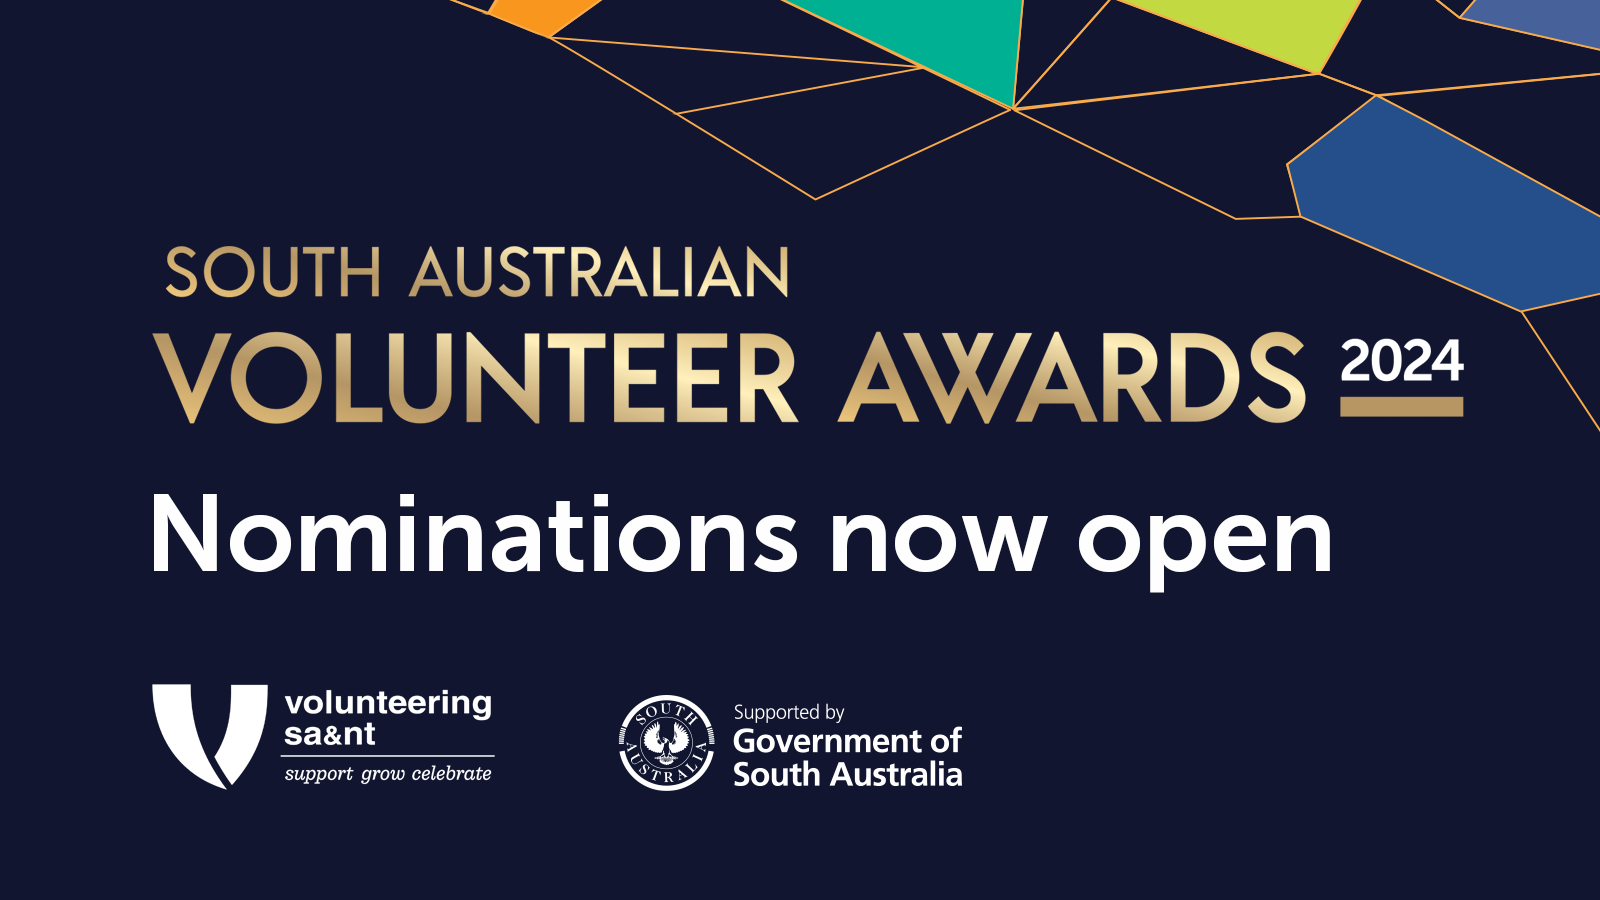 South Australian Volunteer Awards 2024 Nominations now open